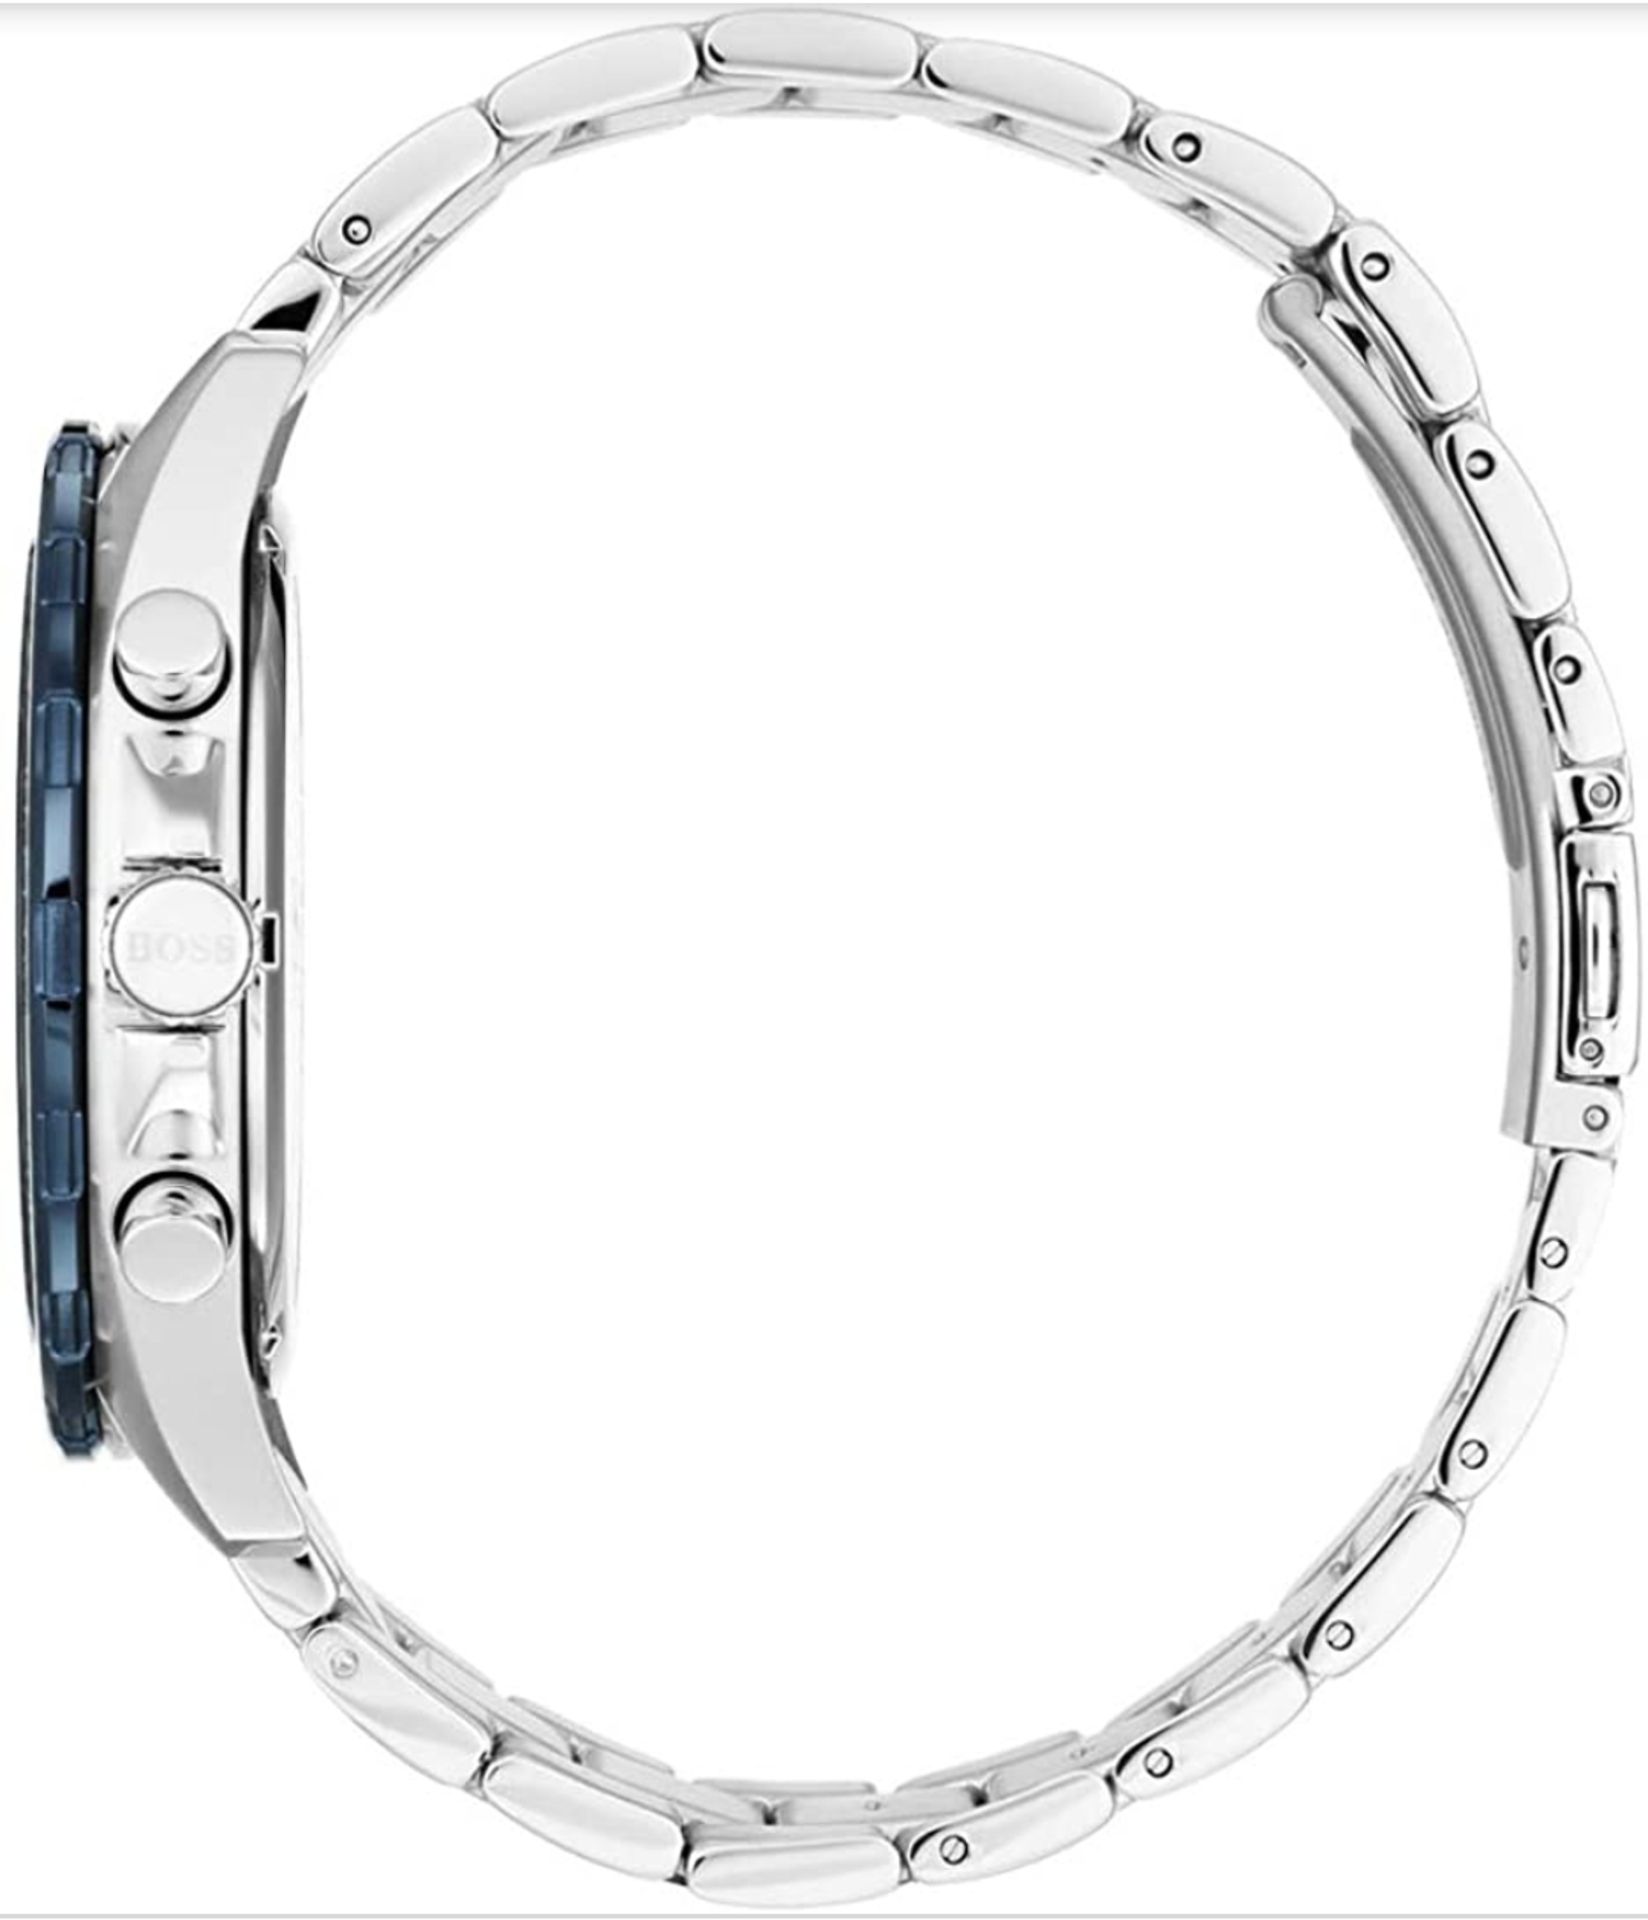 Hugo Boss Men's Intensity Silver Bracelet Chronograph Watch - Image 3 of 5